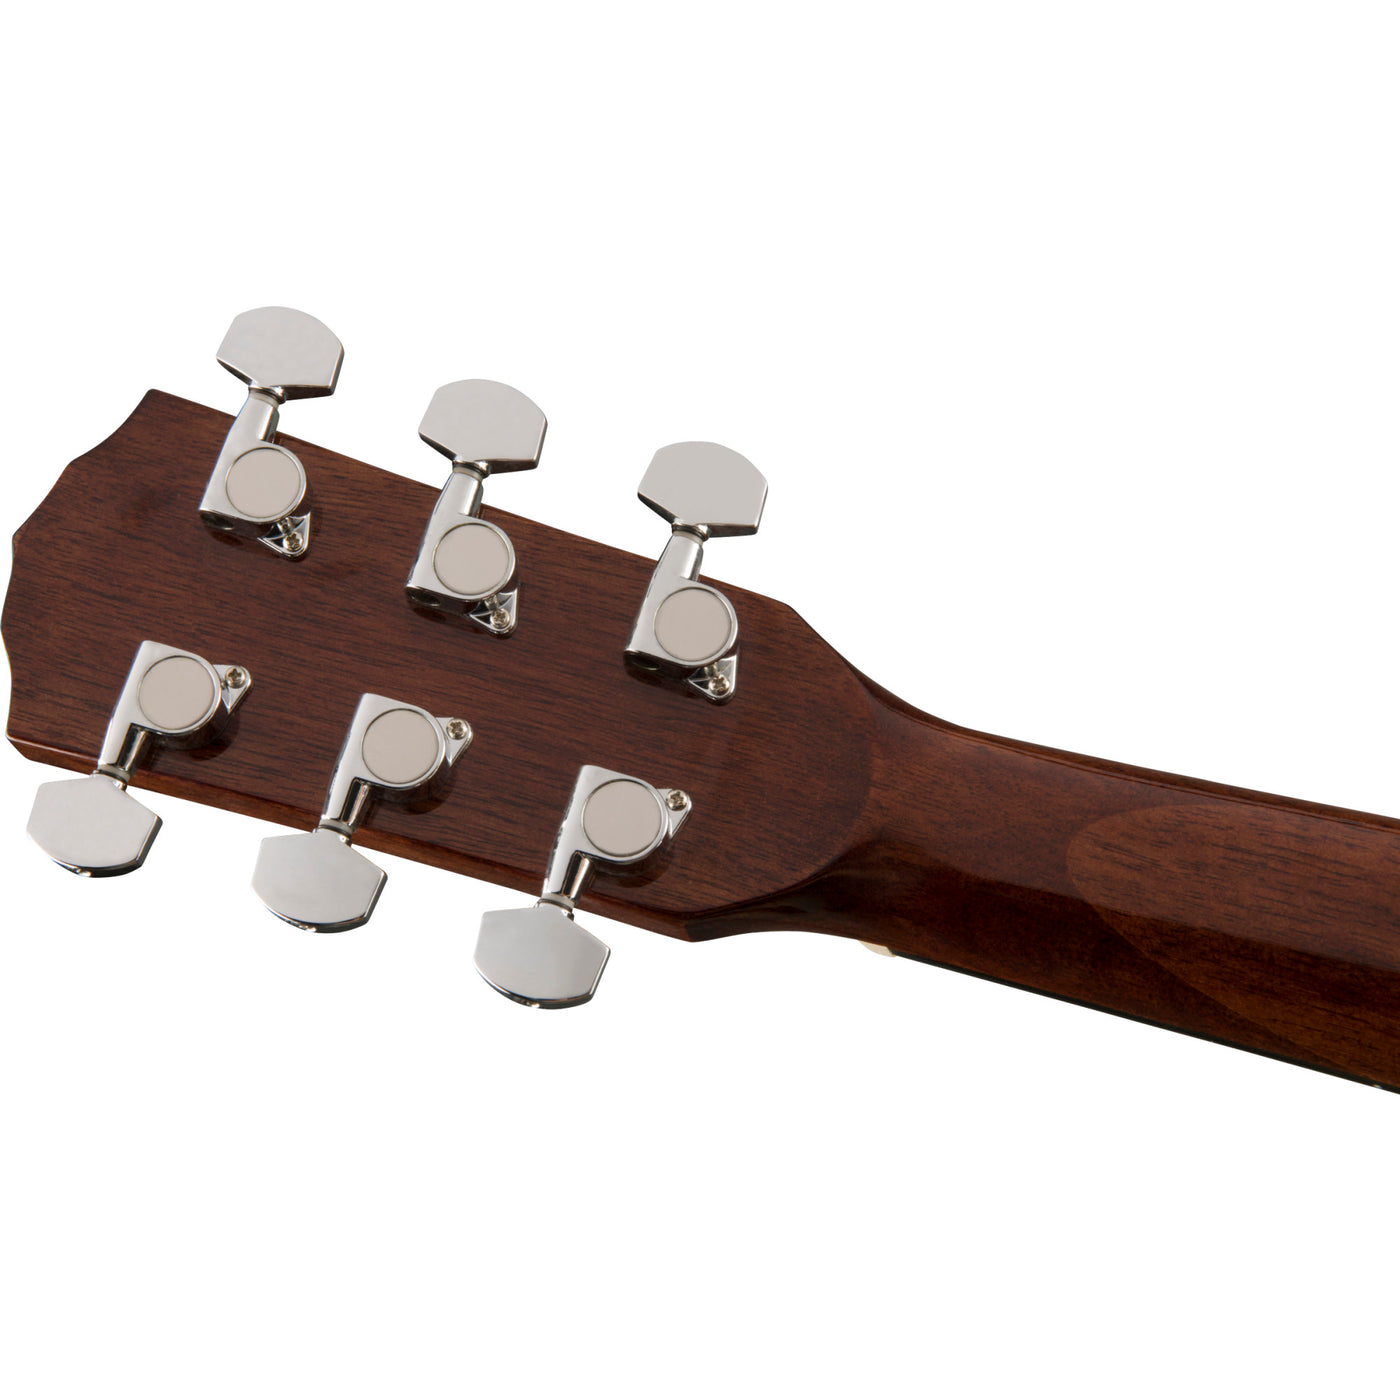 Fender CD-60S  Dreadnought Left Hand Acoustic Guitar, Natural (0970115021)